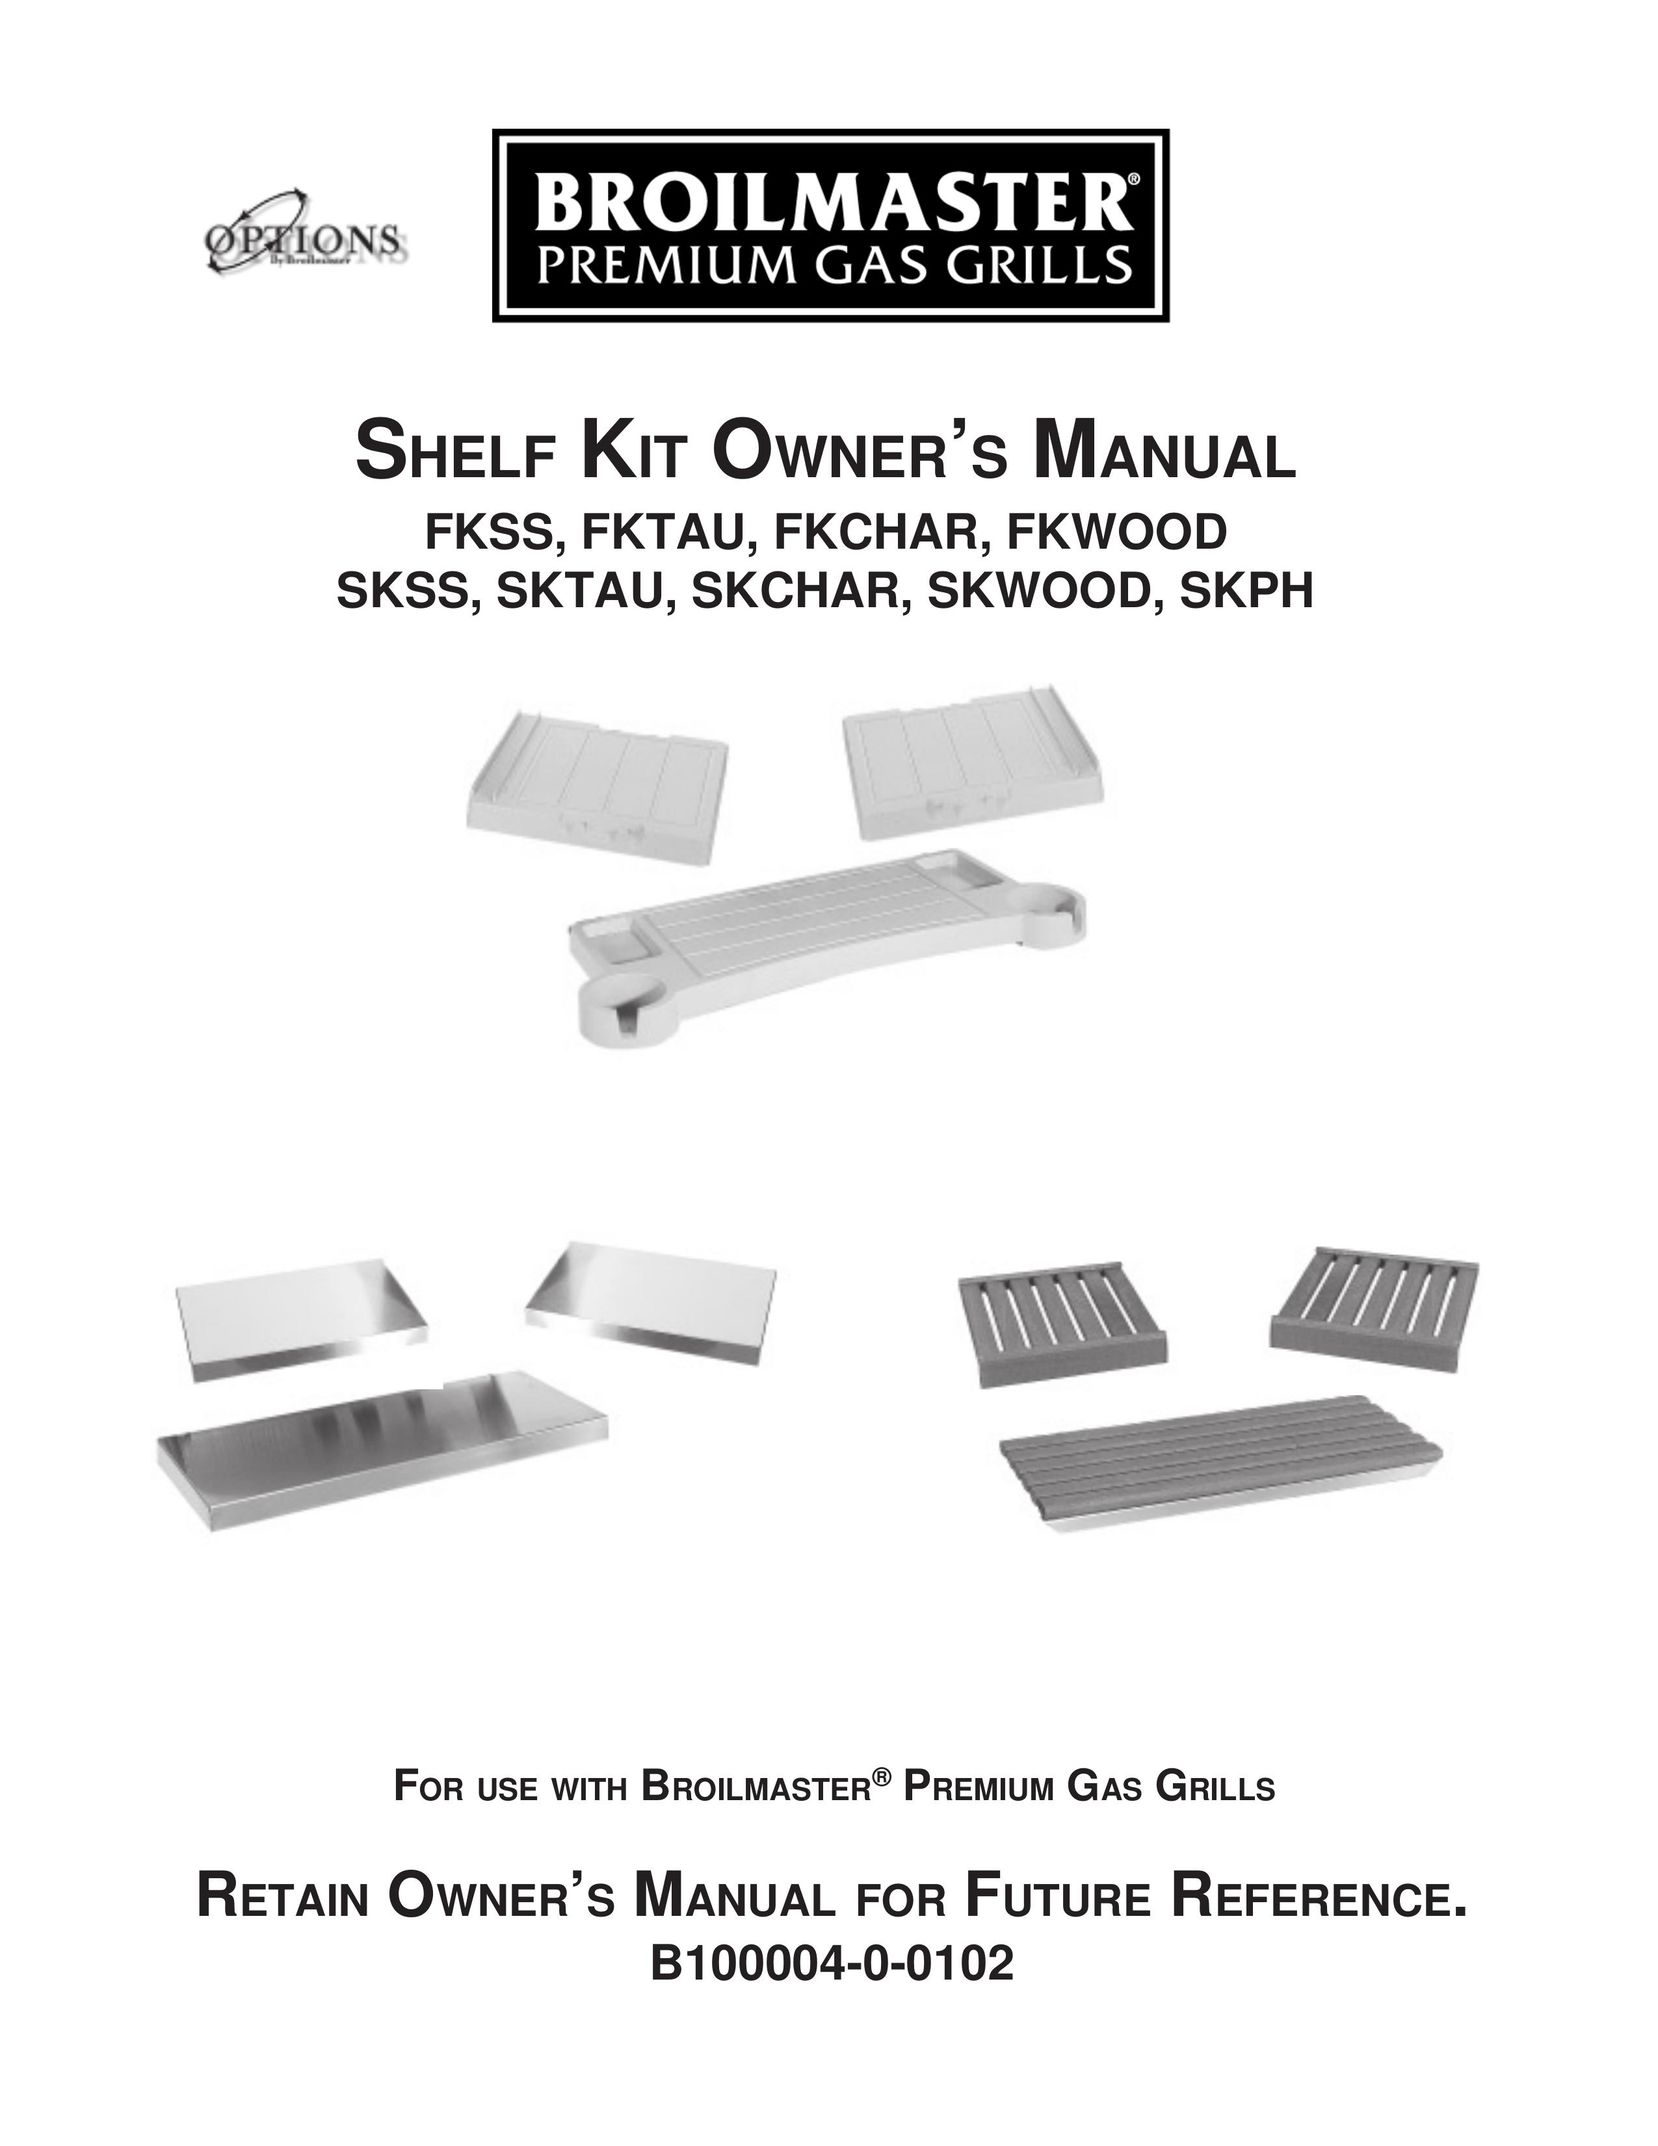 Broilmaster SKTAU Kitchen Grill User Manual